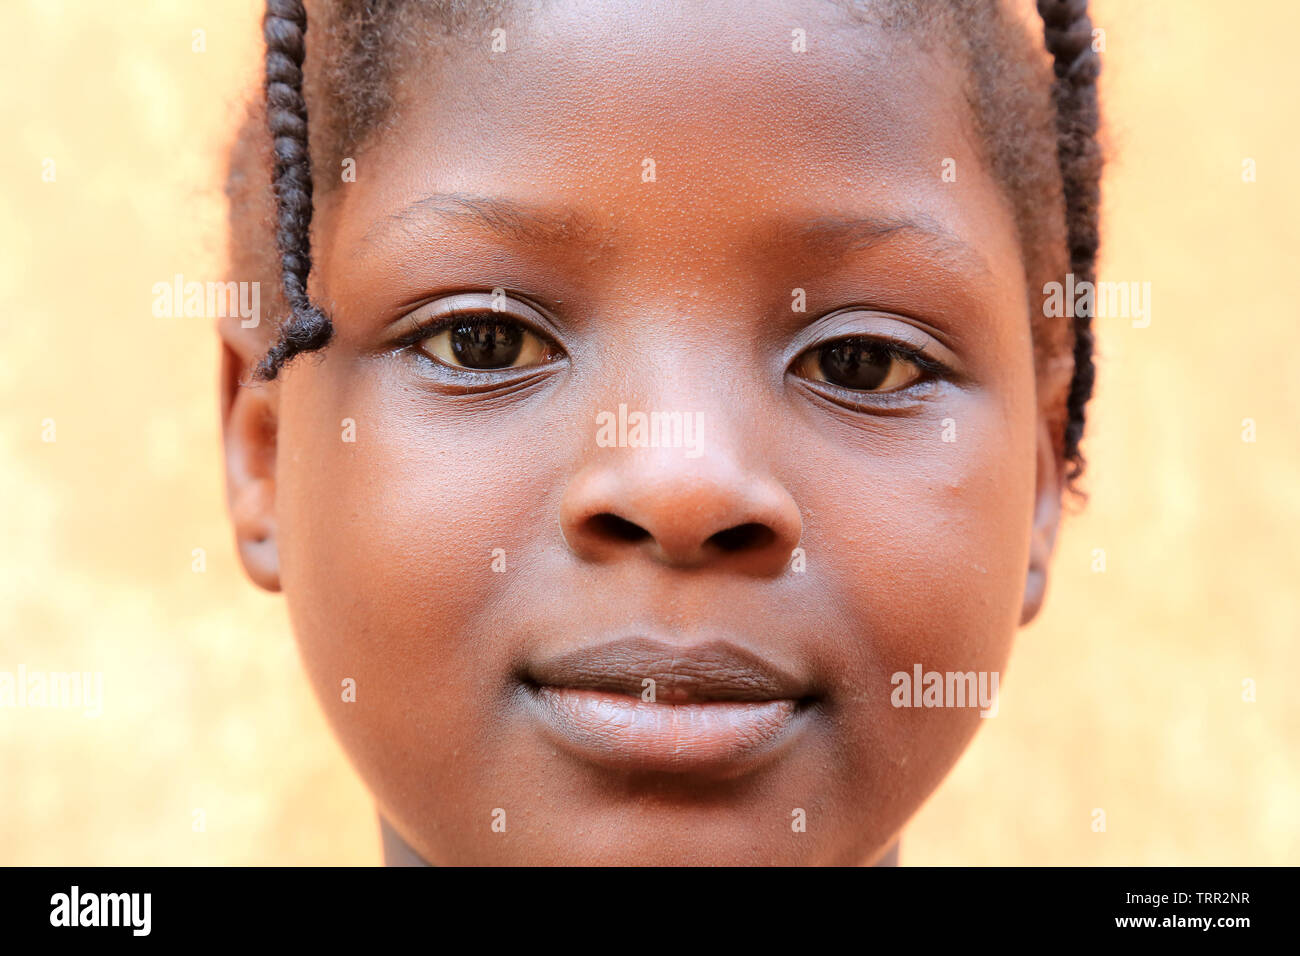 Ritratto d'une petite fille togolaise. La convenzione di Lomé. Il Togo. Afrique de l'Ouest. Foto Stock